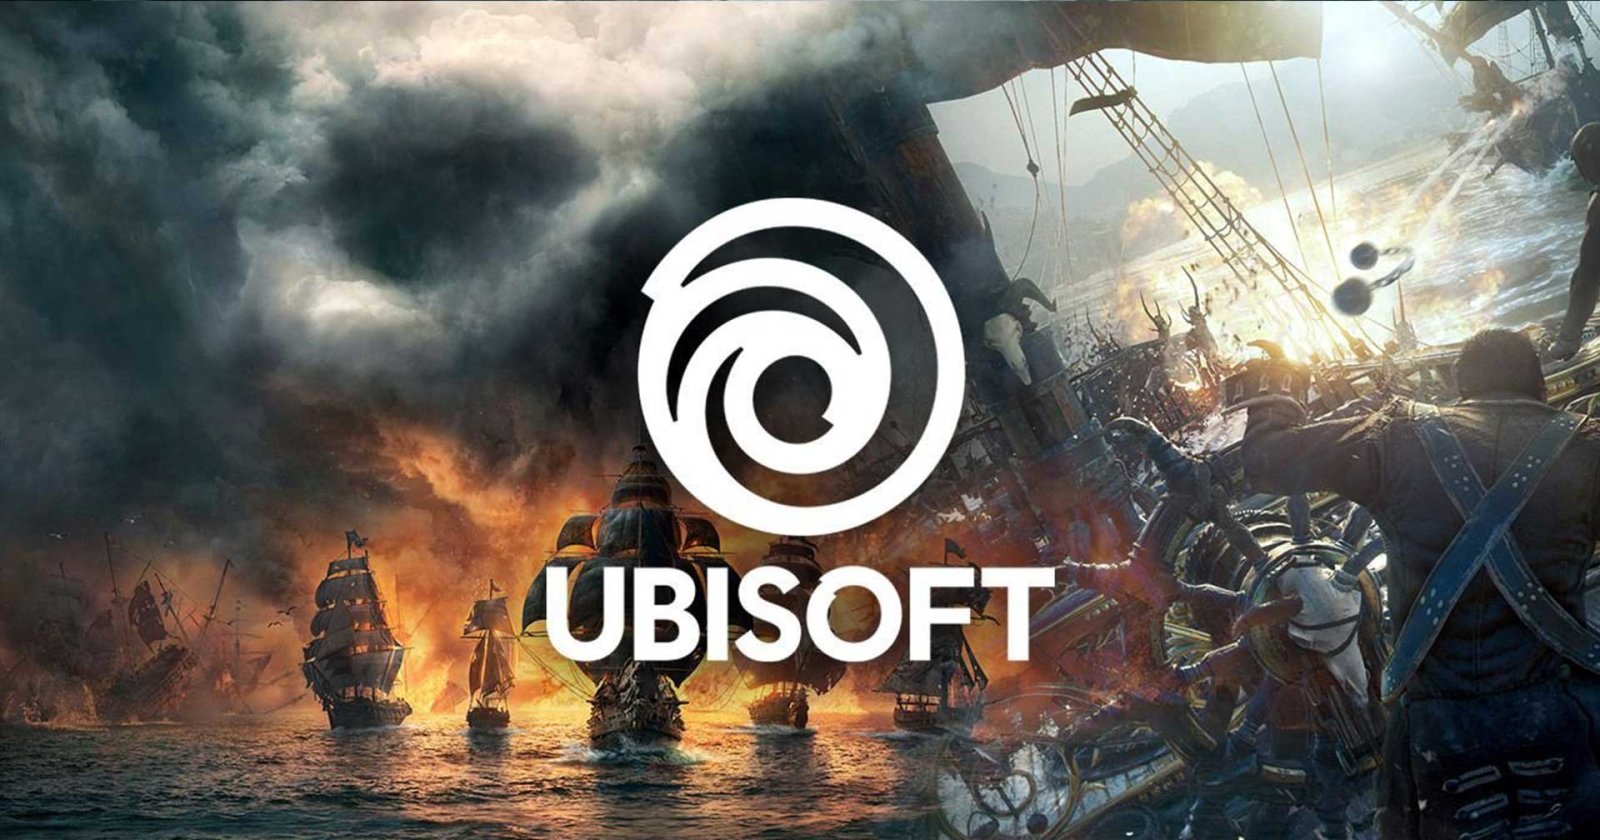 Ubisoft แจ้งปิดบัญชีเกมที่ไม่ได้ล็อกอินเป็นเวลานาน ส่งผลให้เกมเมอร์ออกมาวิจารณ์หนัก